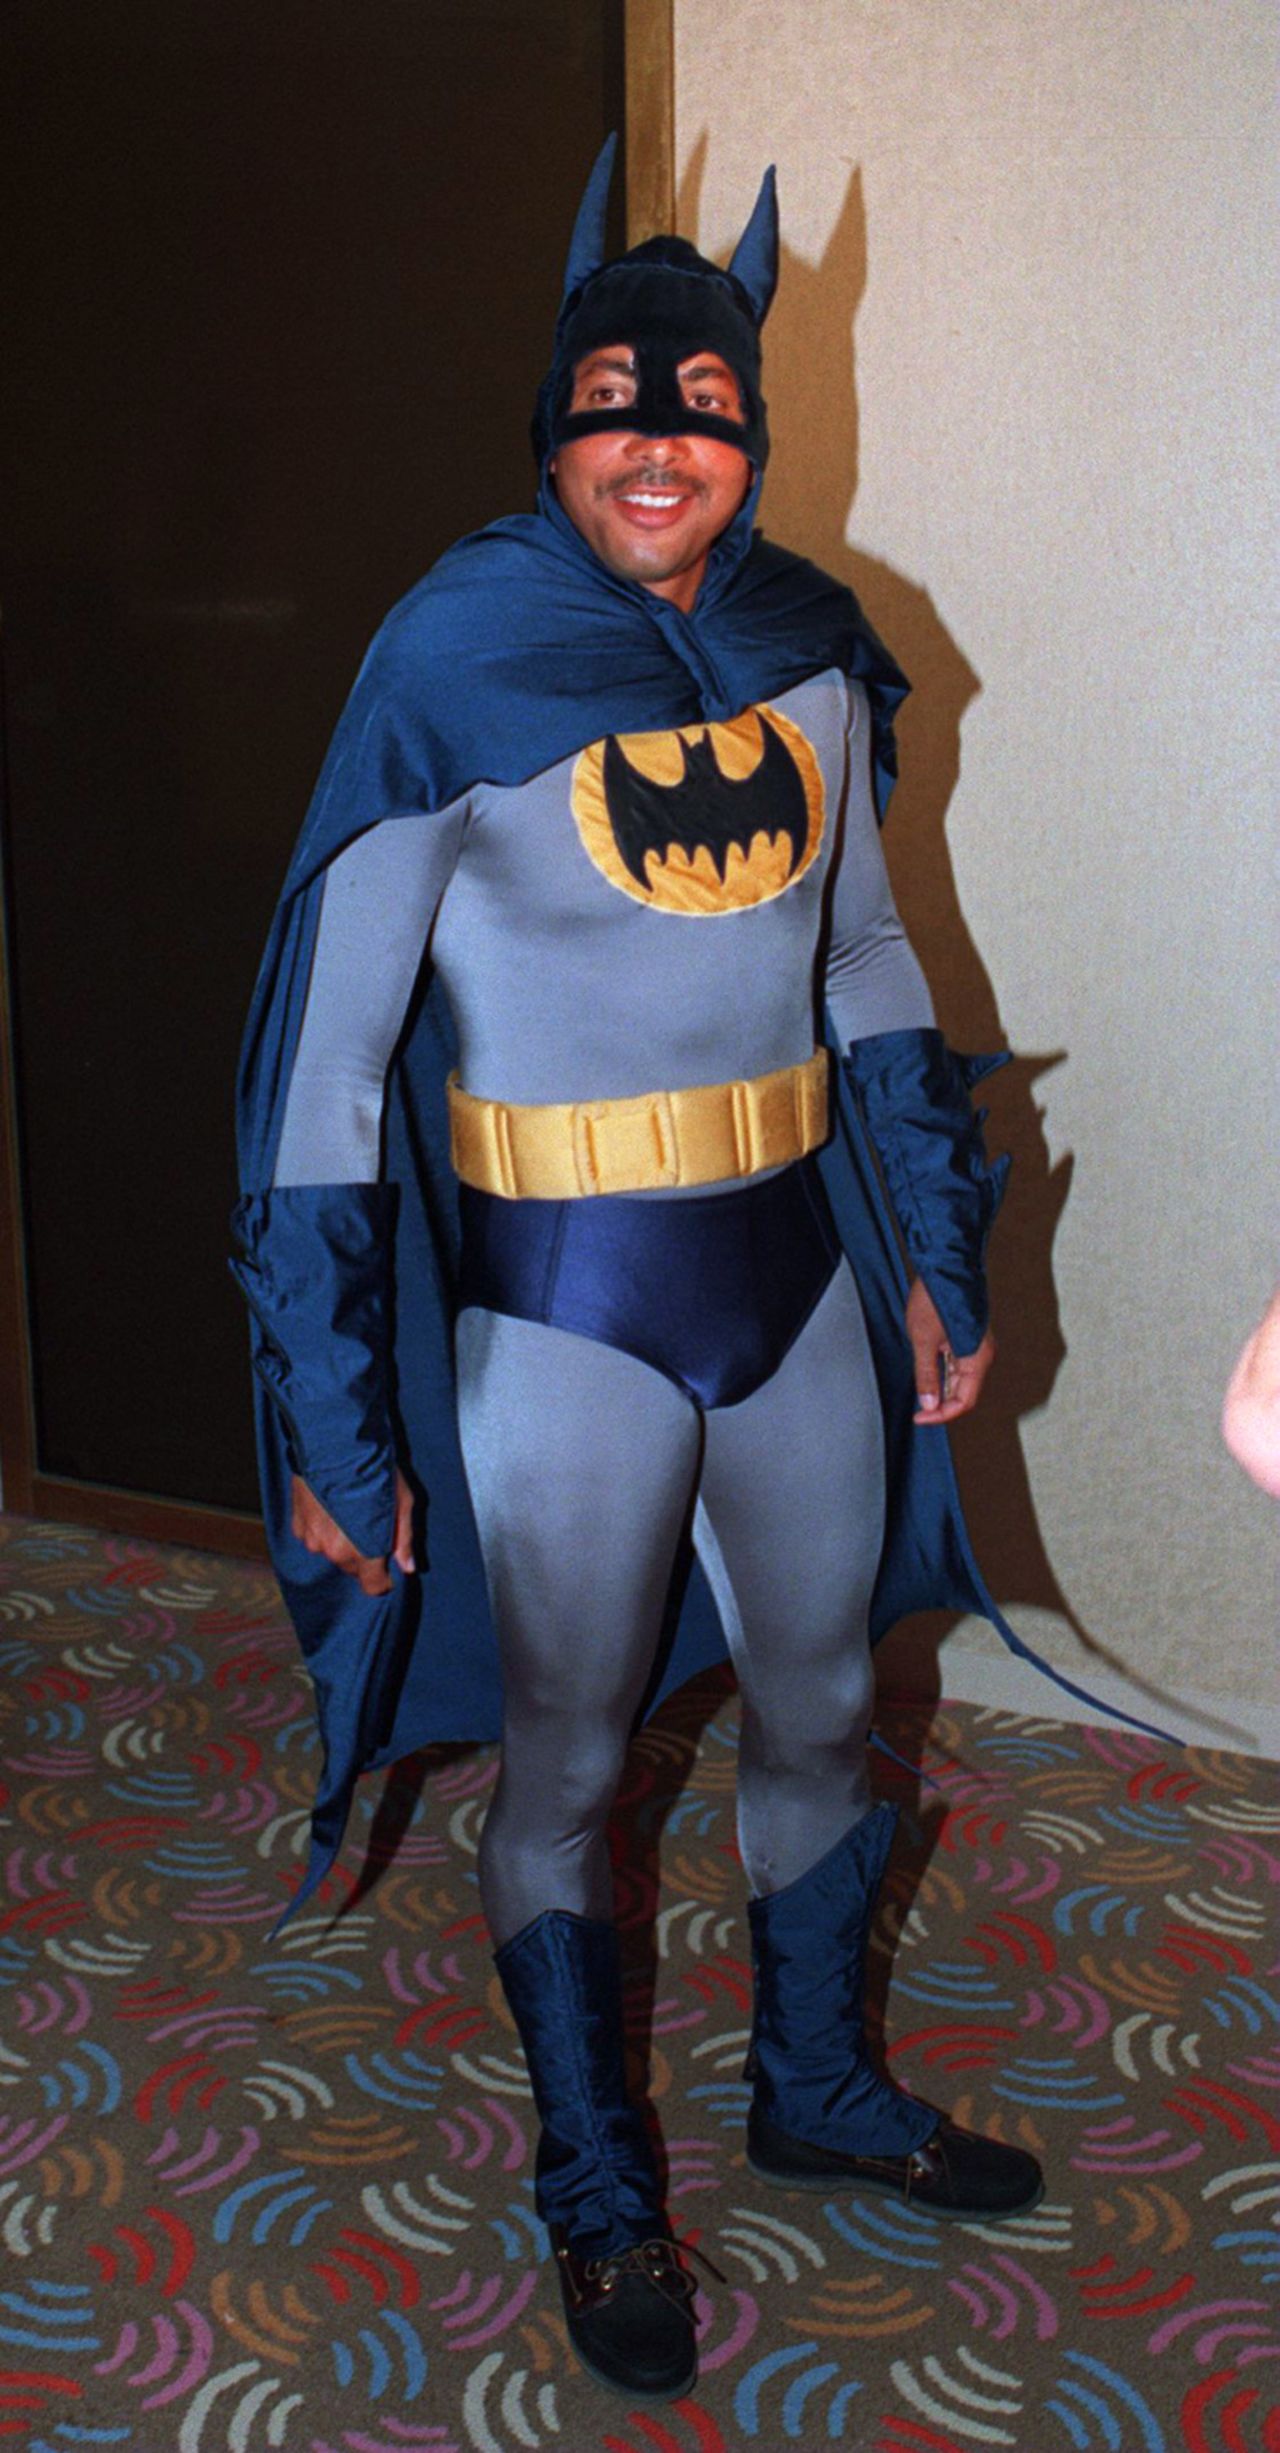 Phil DeFreitas dresses up as Batman for the Christmas party, Melbourne, December 25, 1994